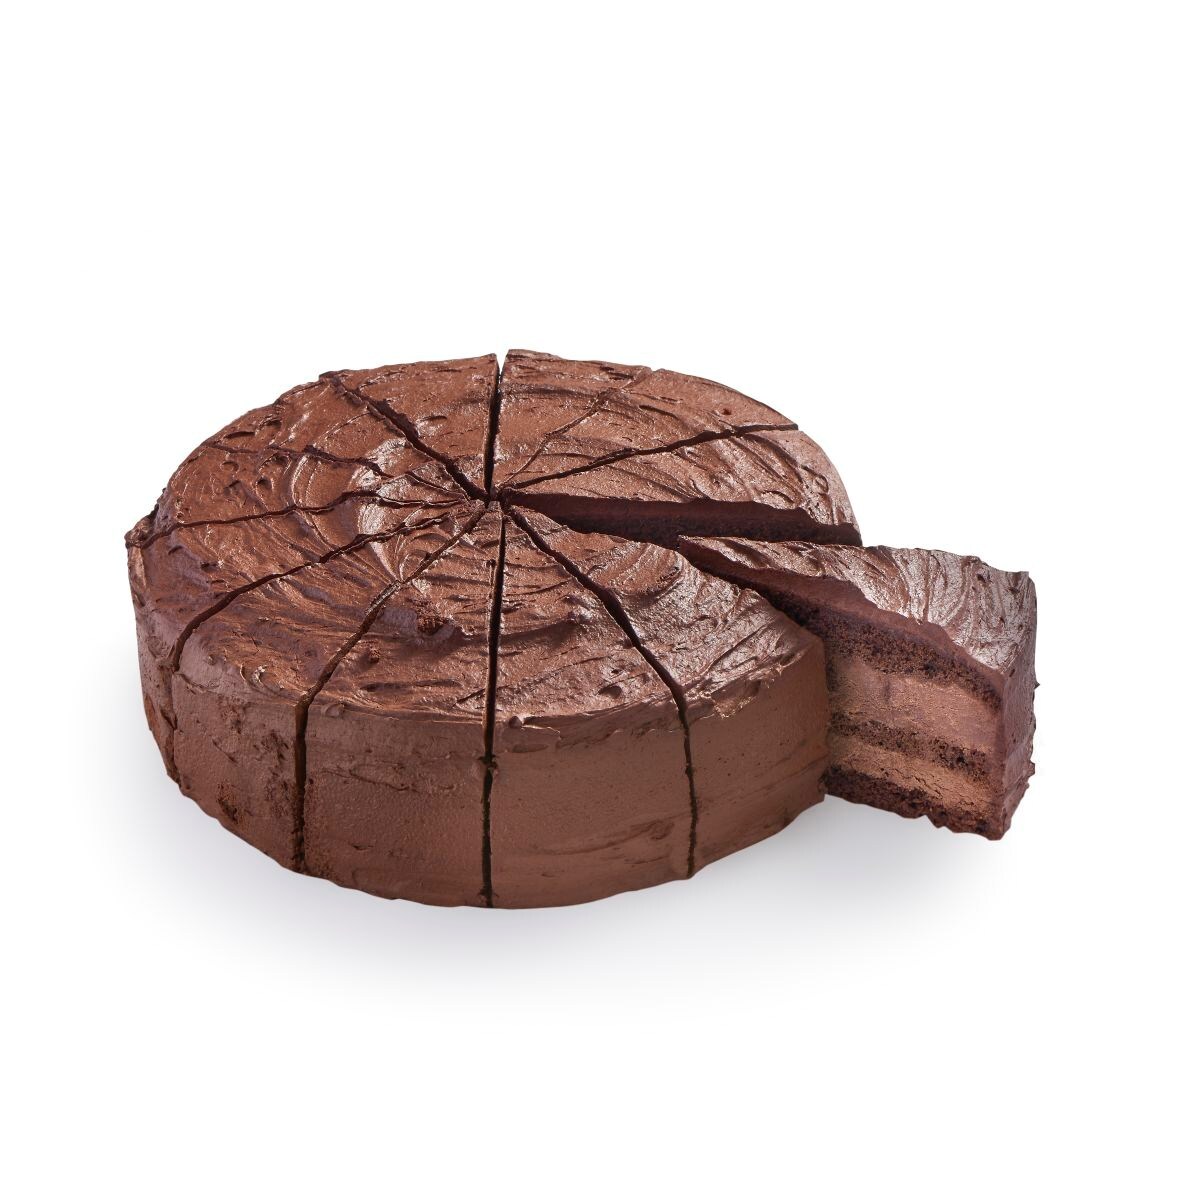 67124 Chocolade fudgetaart (78550) 1 x 1500 gram